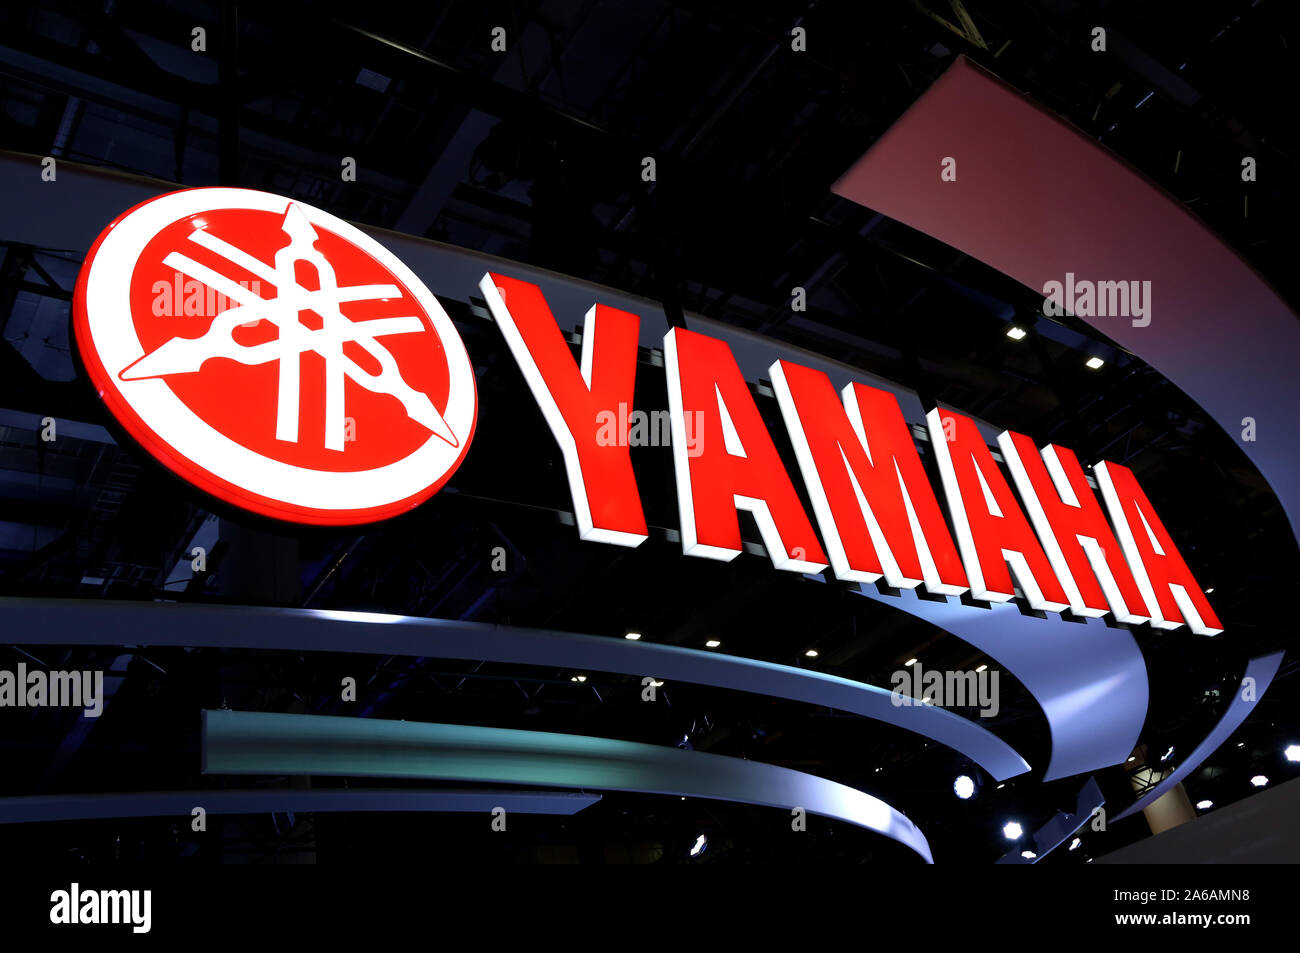 yamaha motorcycles logo